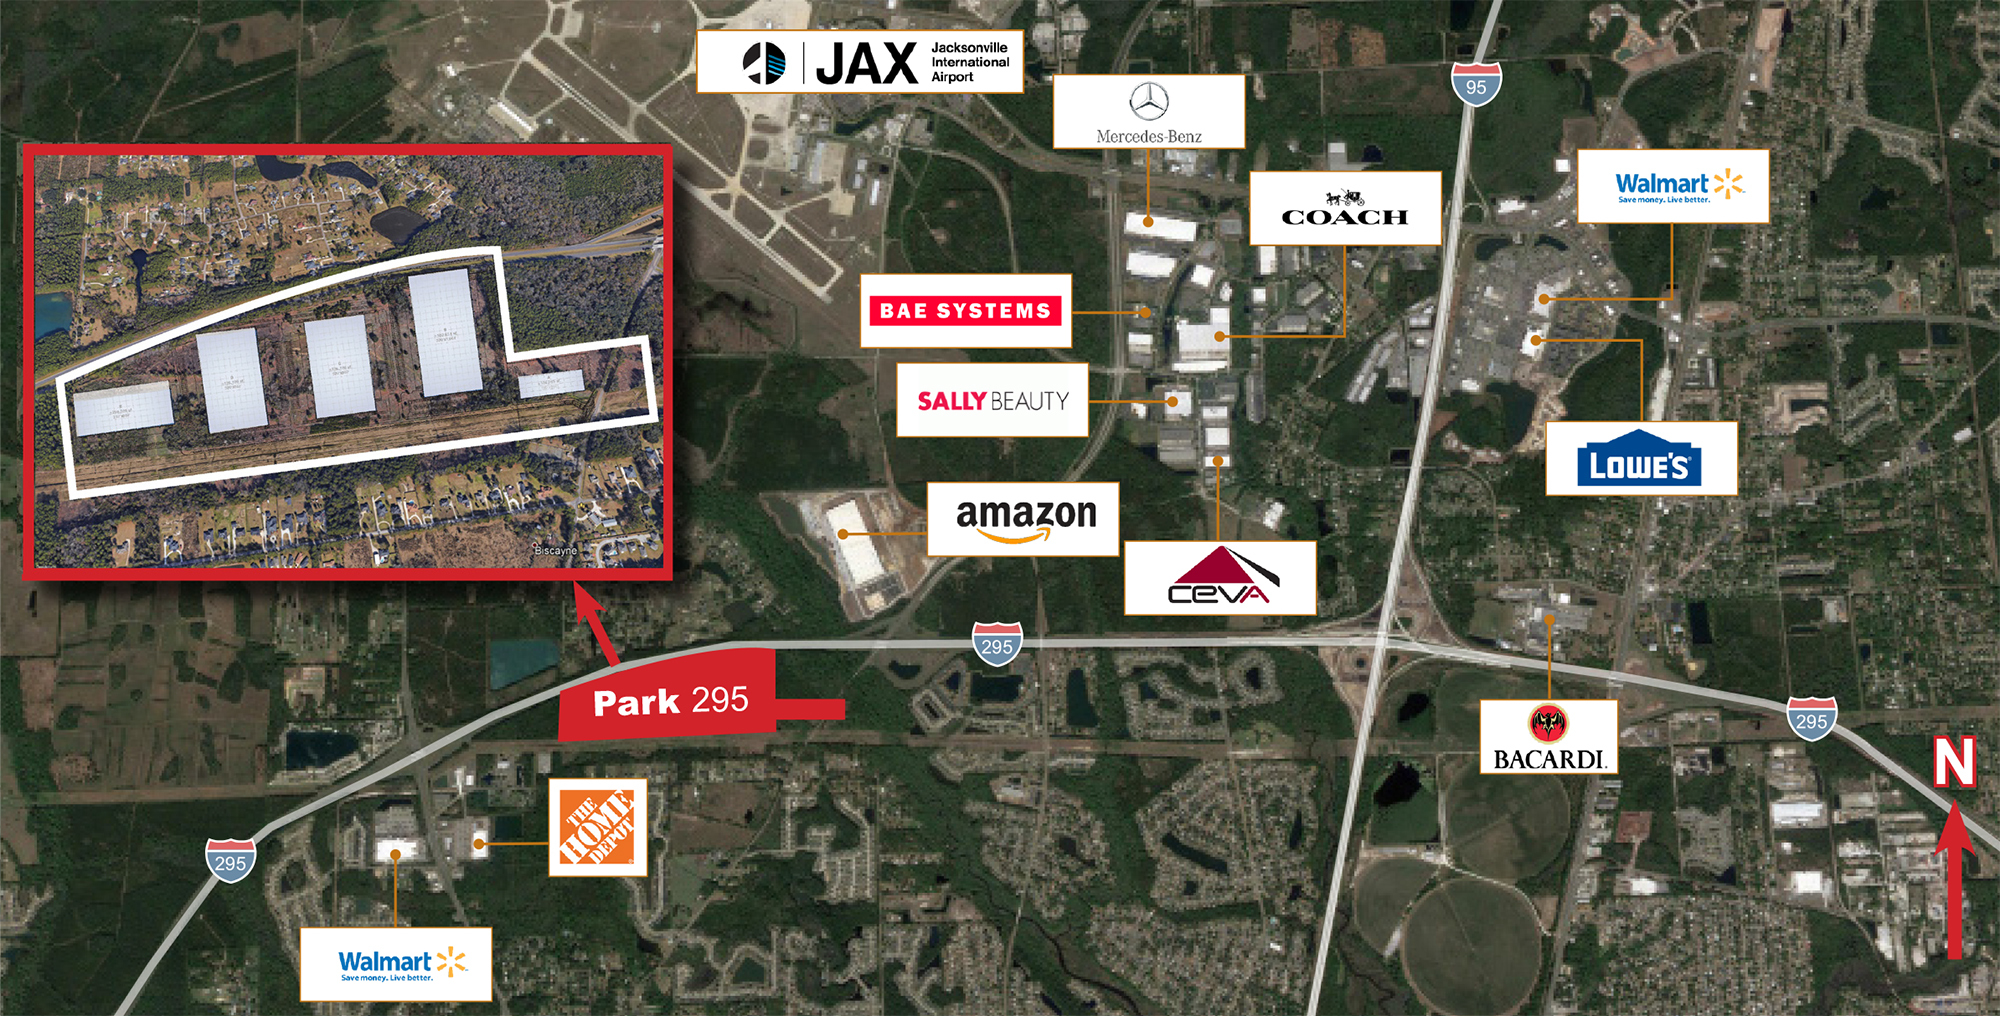 The Park 295 Industrial Park is under development in North Jacksonville near Jacksonville International Airport.